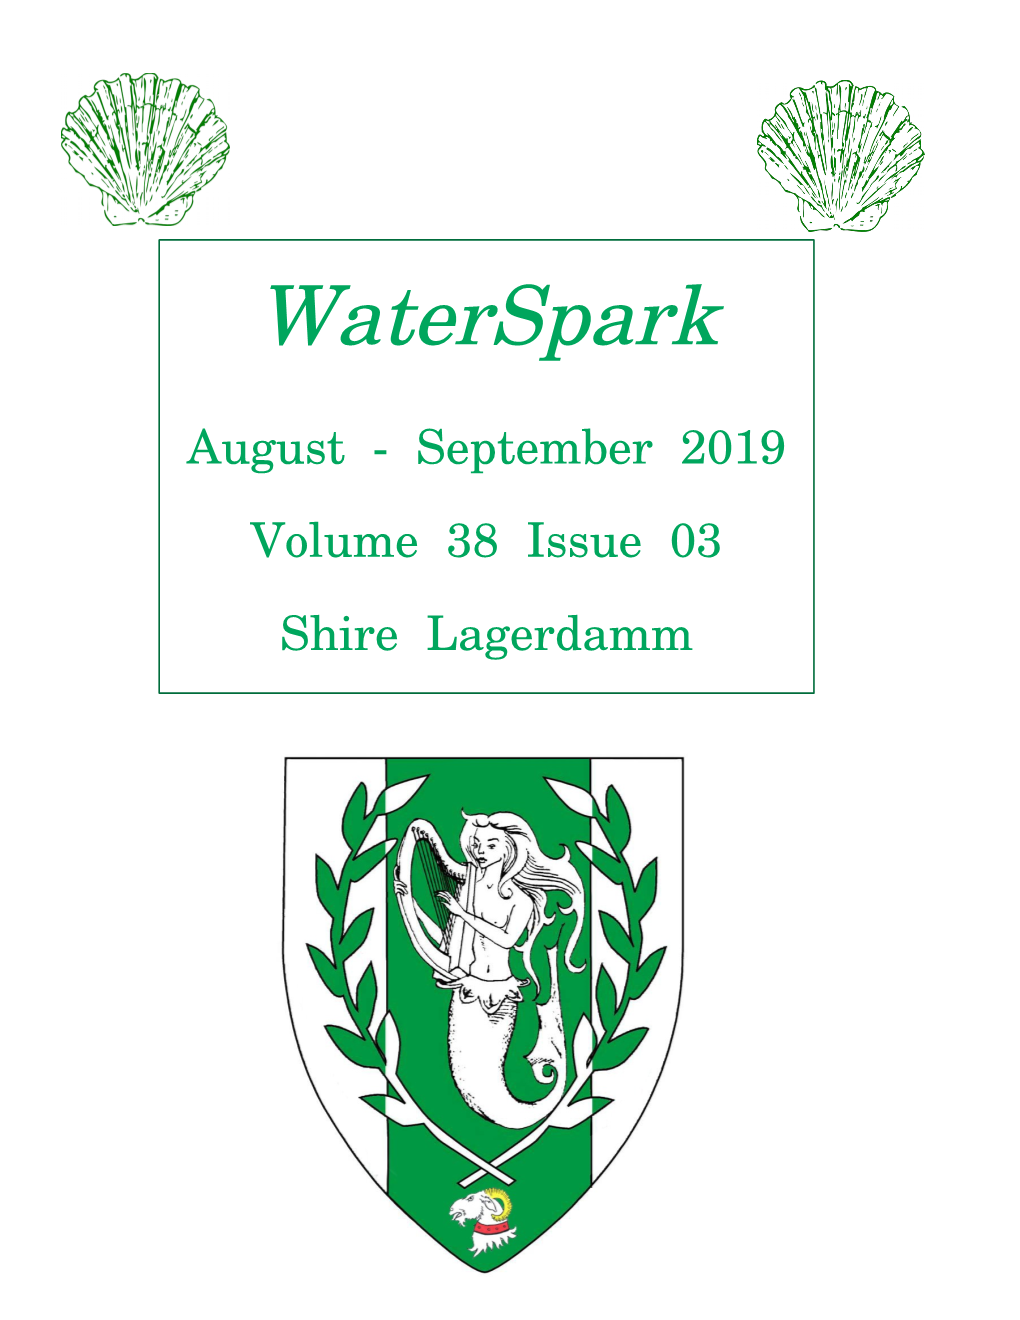 Waterspark August - September 2019 Volume 38 Issue 03 Shire Lagerdamm